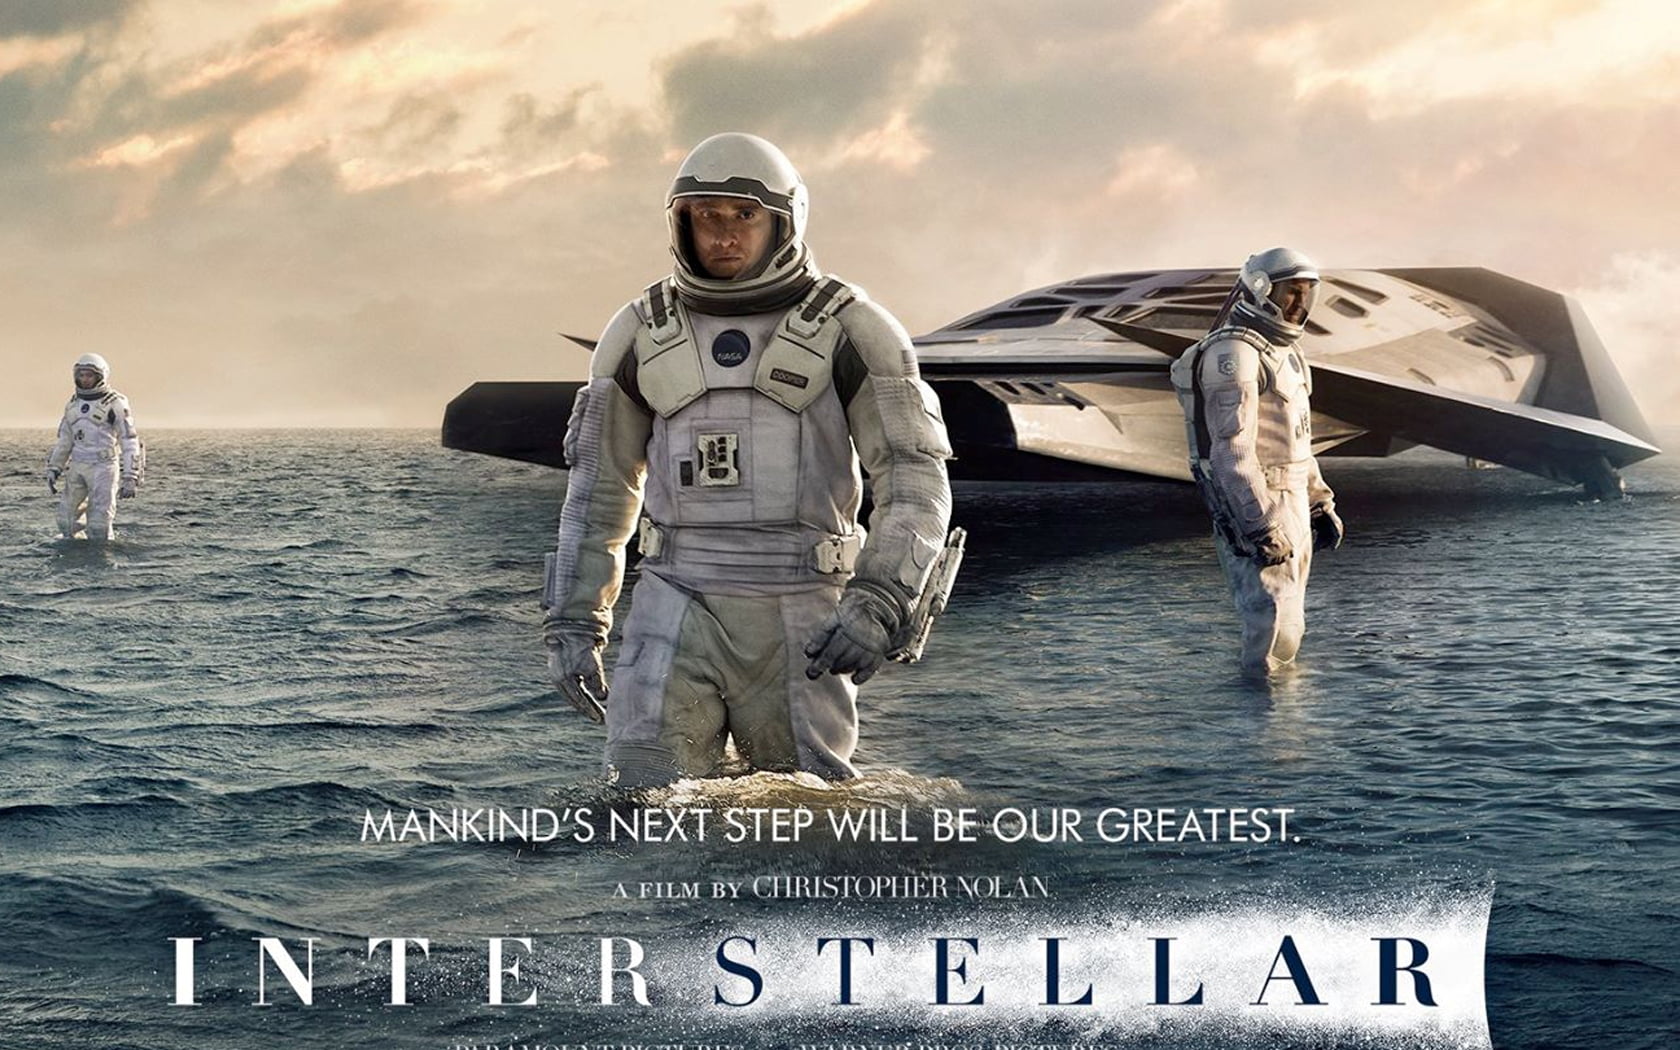 Interstellar Poster, Intersteller wallpaper, Movies, Hollywood Movies